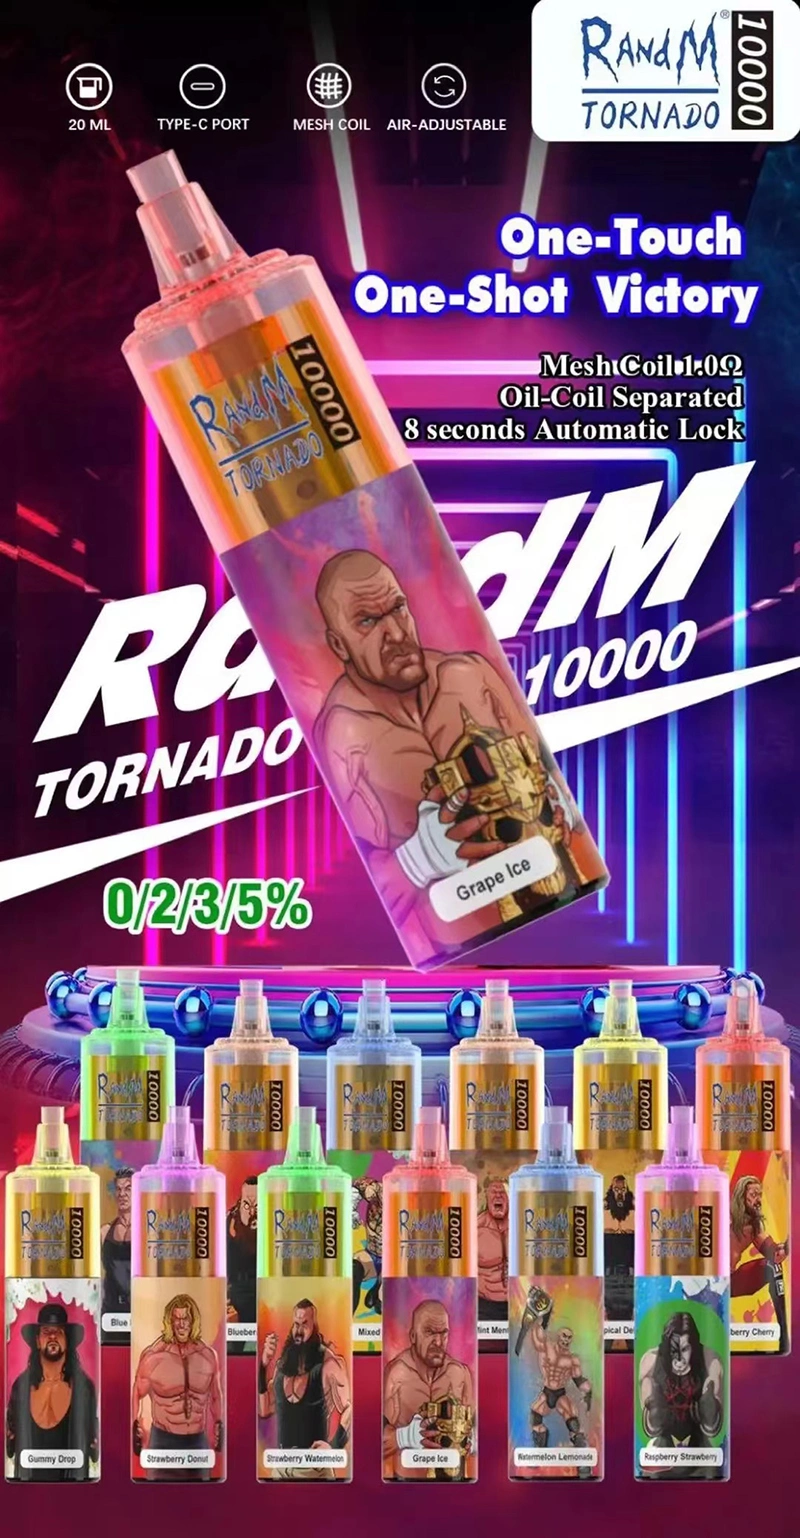 New Arrival 12 Flavors Disposable Vape Stick 10000 Puffs 0% 2% 3% 5% Nicotine Randm Tornado 20ml Liquid Prefilled